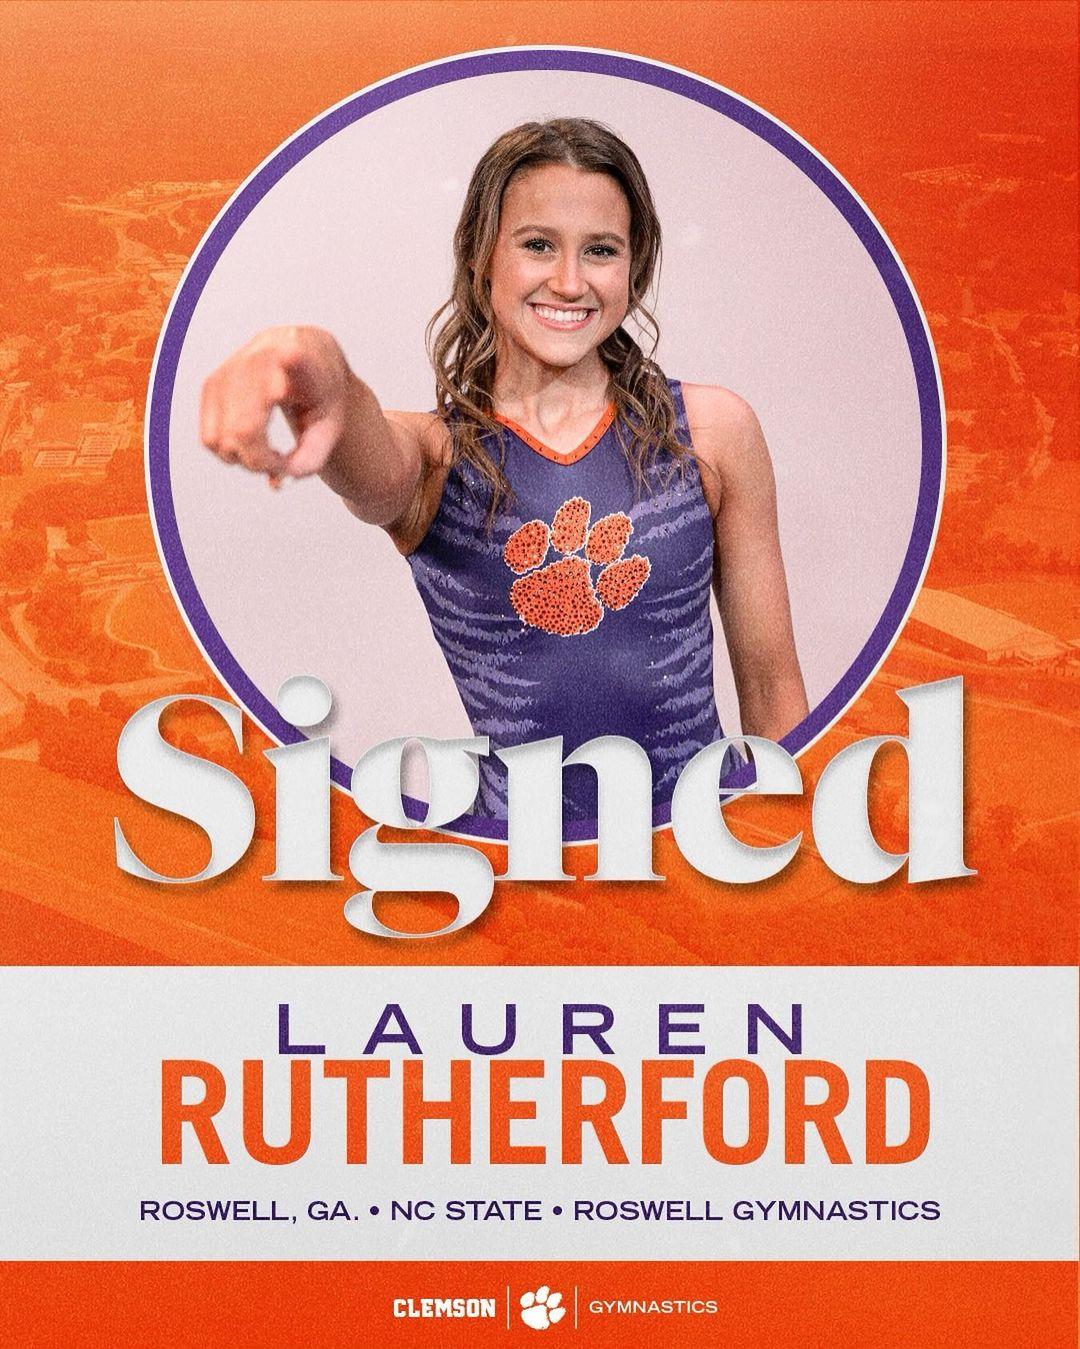 Lauren Rutherford Instagram Post Influencer Campaign